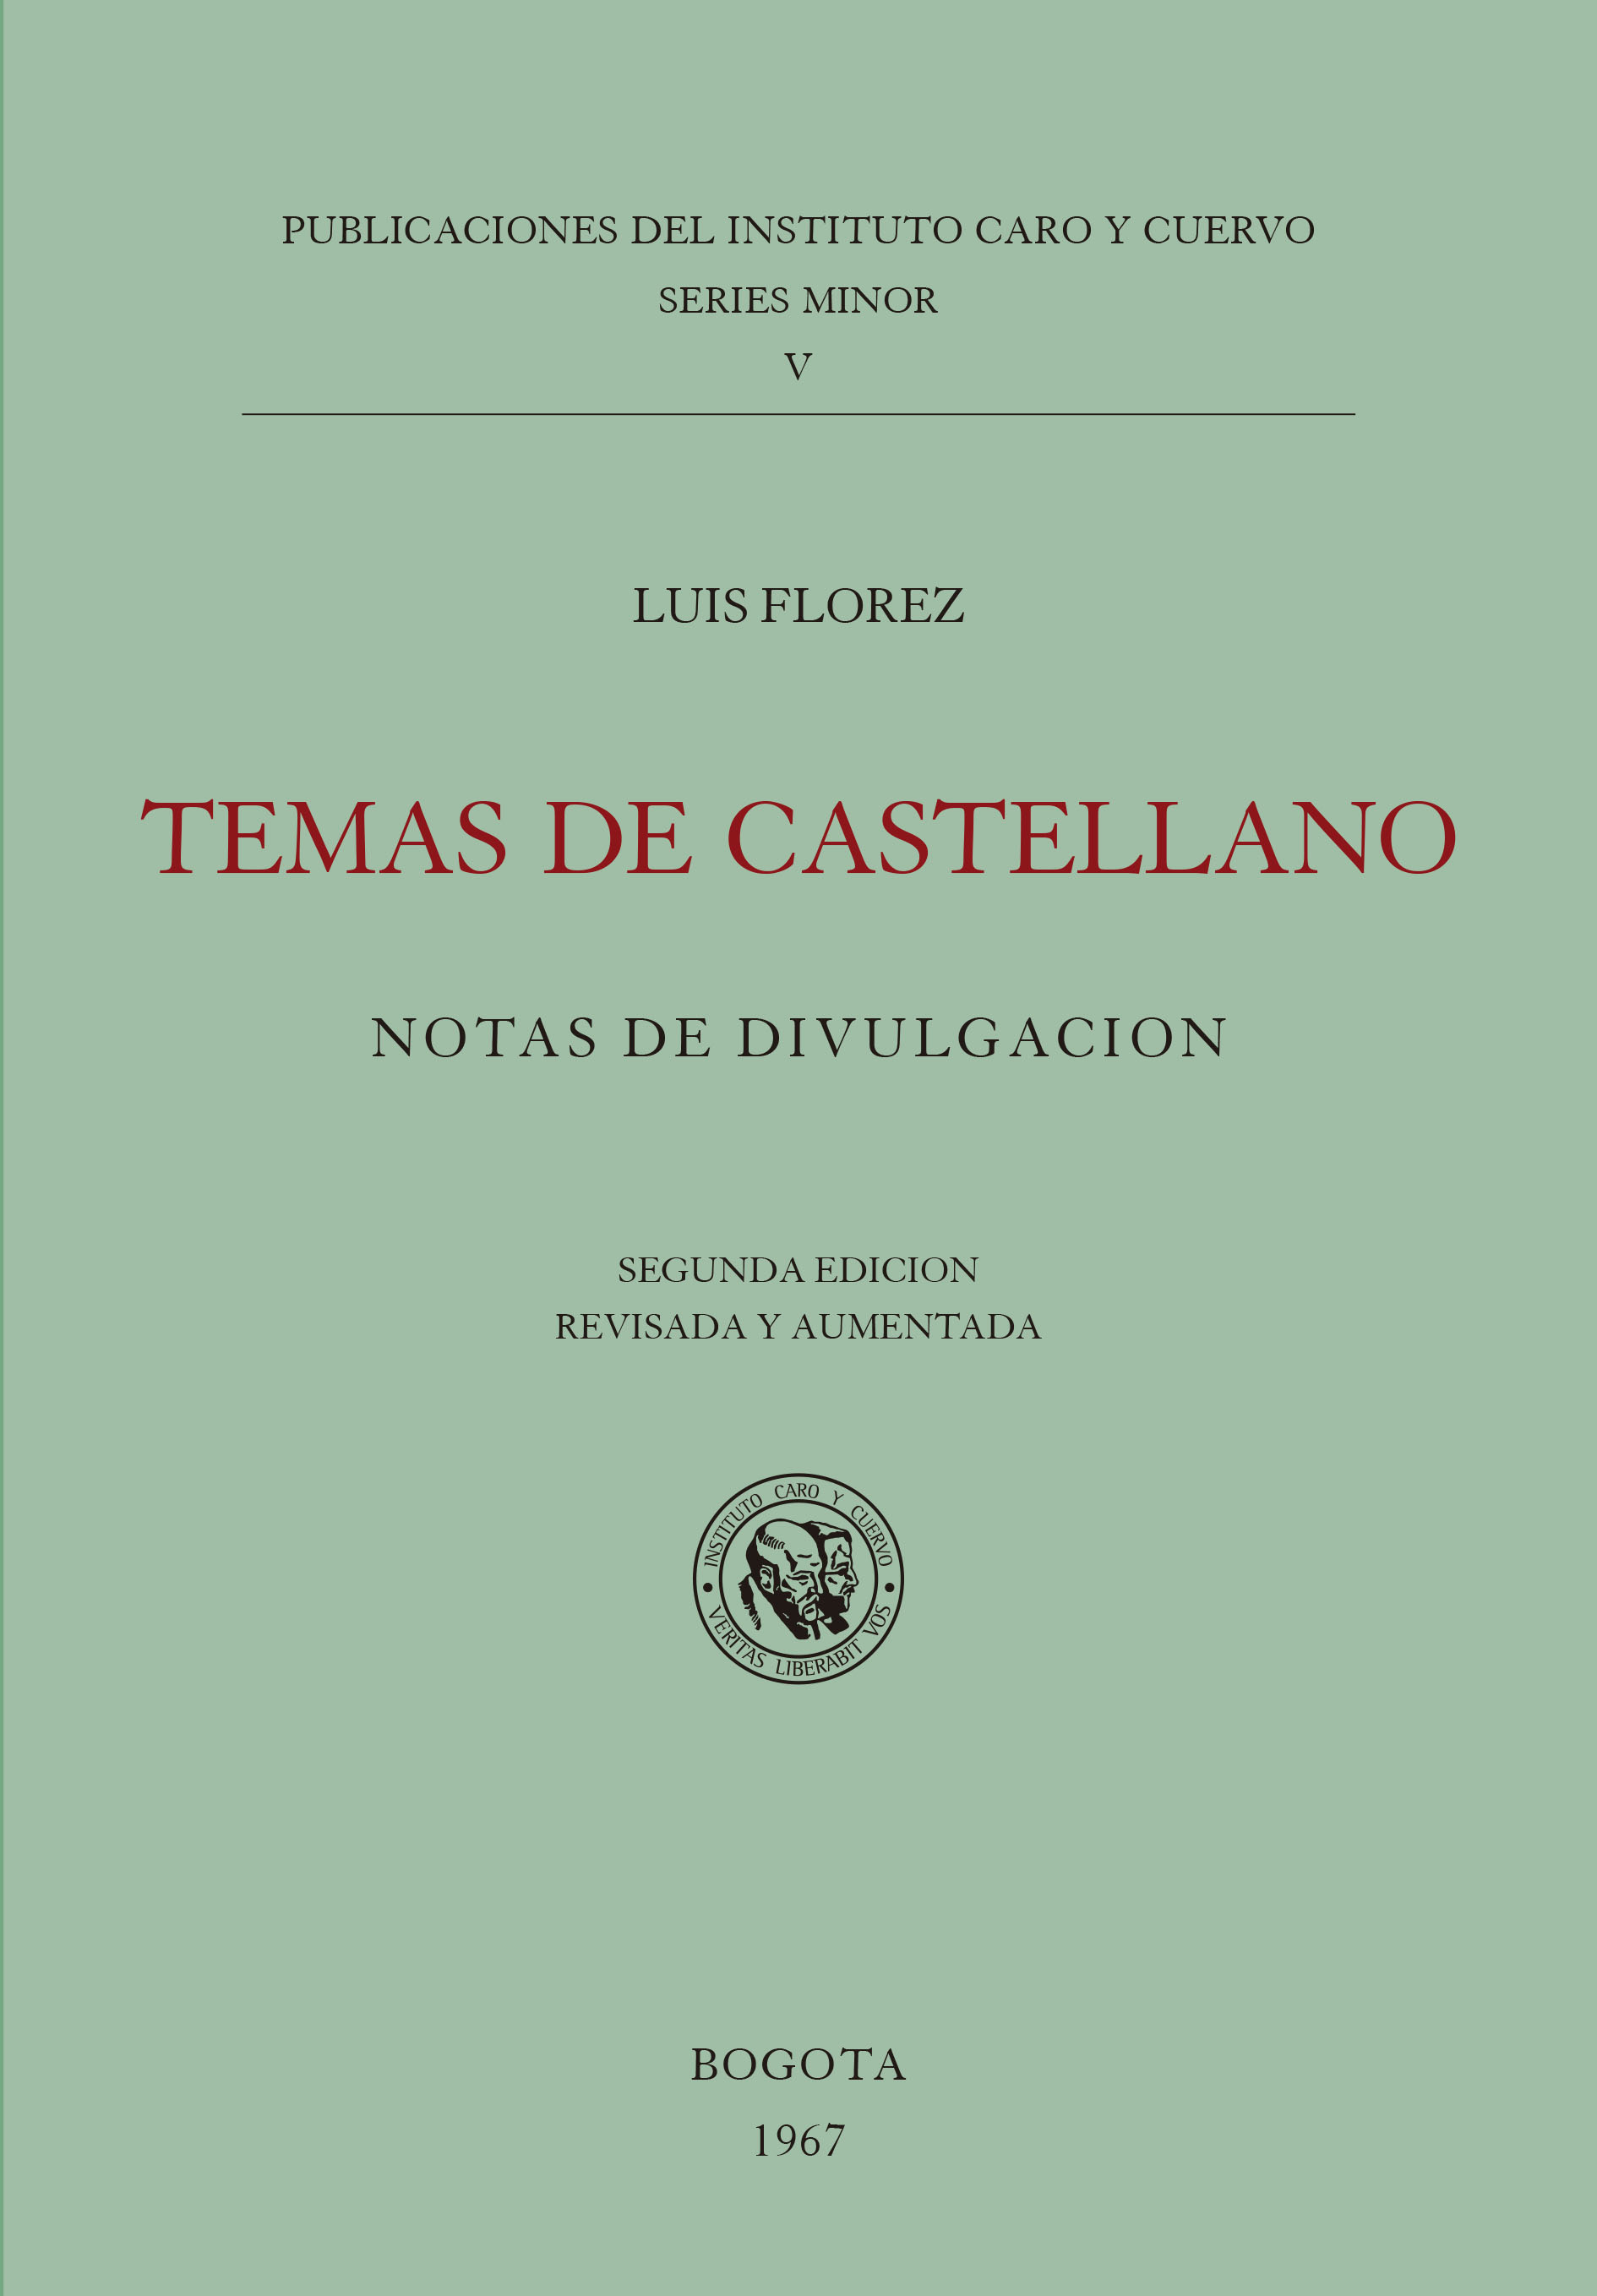 Temas de castellano: notas de divulgación